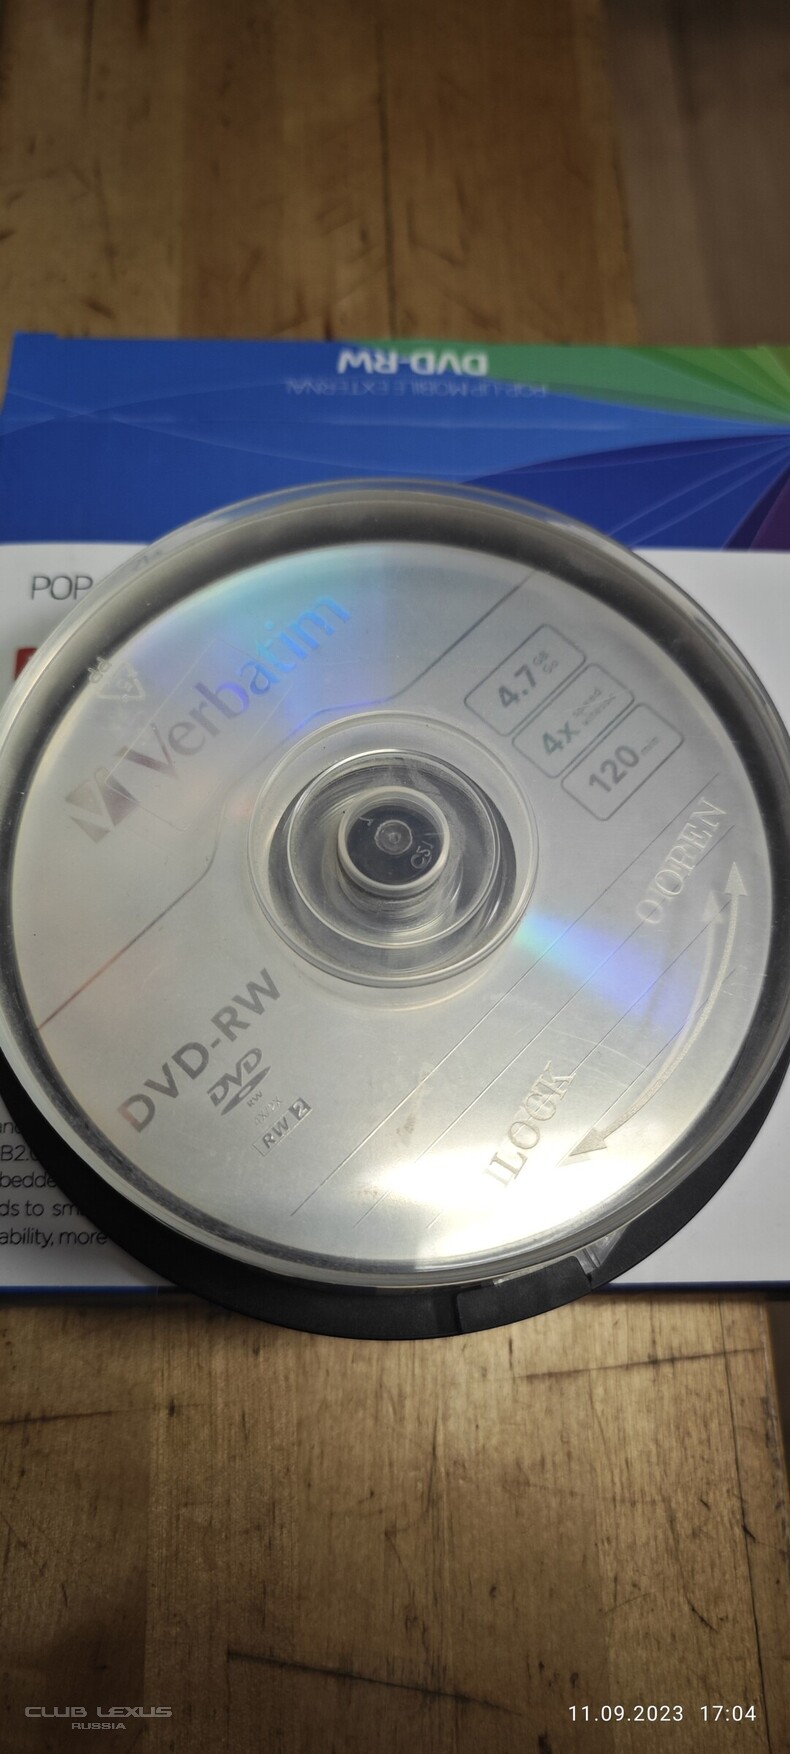    DVD   DolbyDigital 5.1